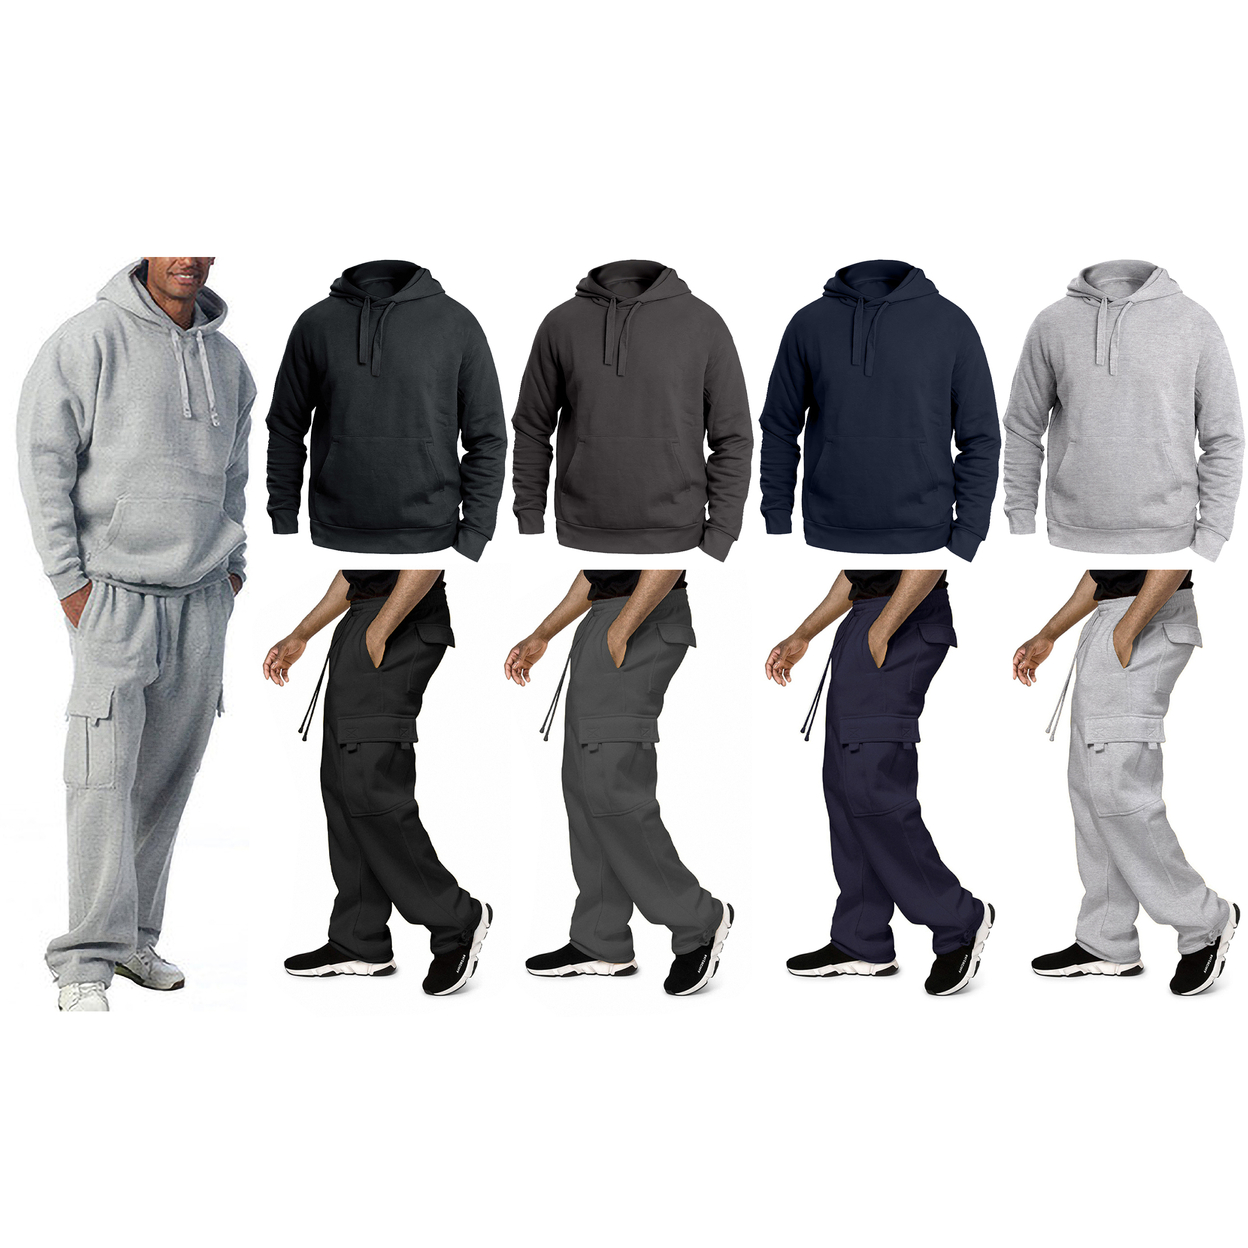 2-Pack: Men's Big & Tall Winter Warm Cozy Athletic Fleece Lined Multi-Pocket Cargo Sweatsuit - Grey, Medium